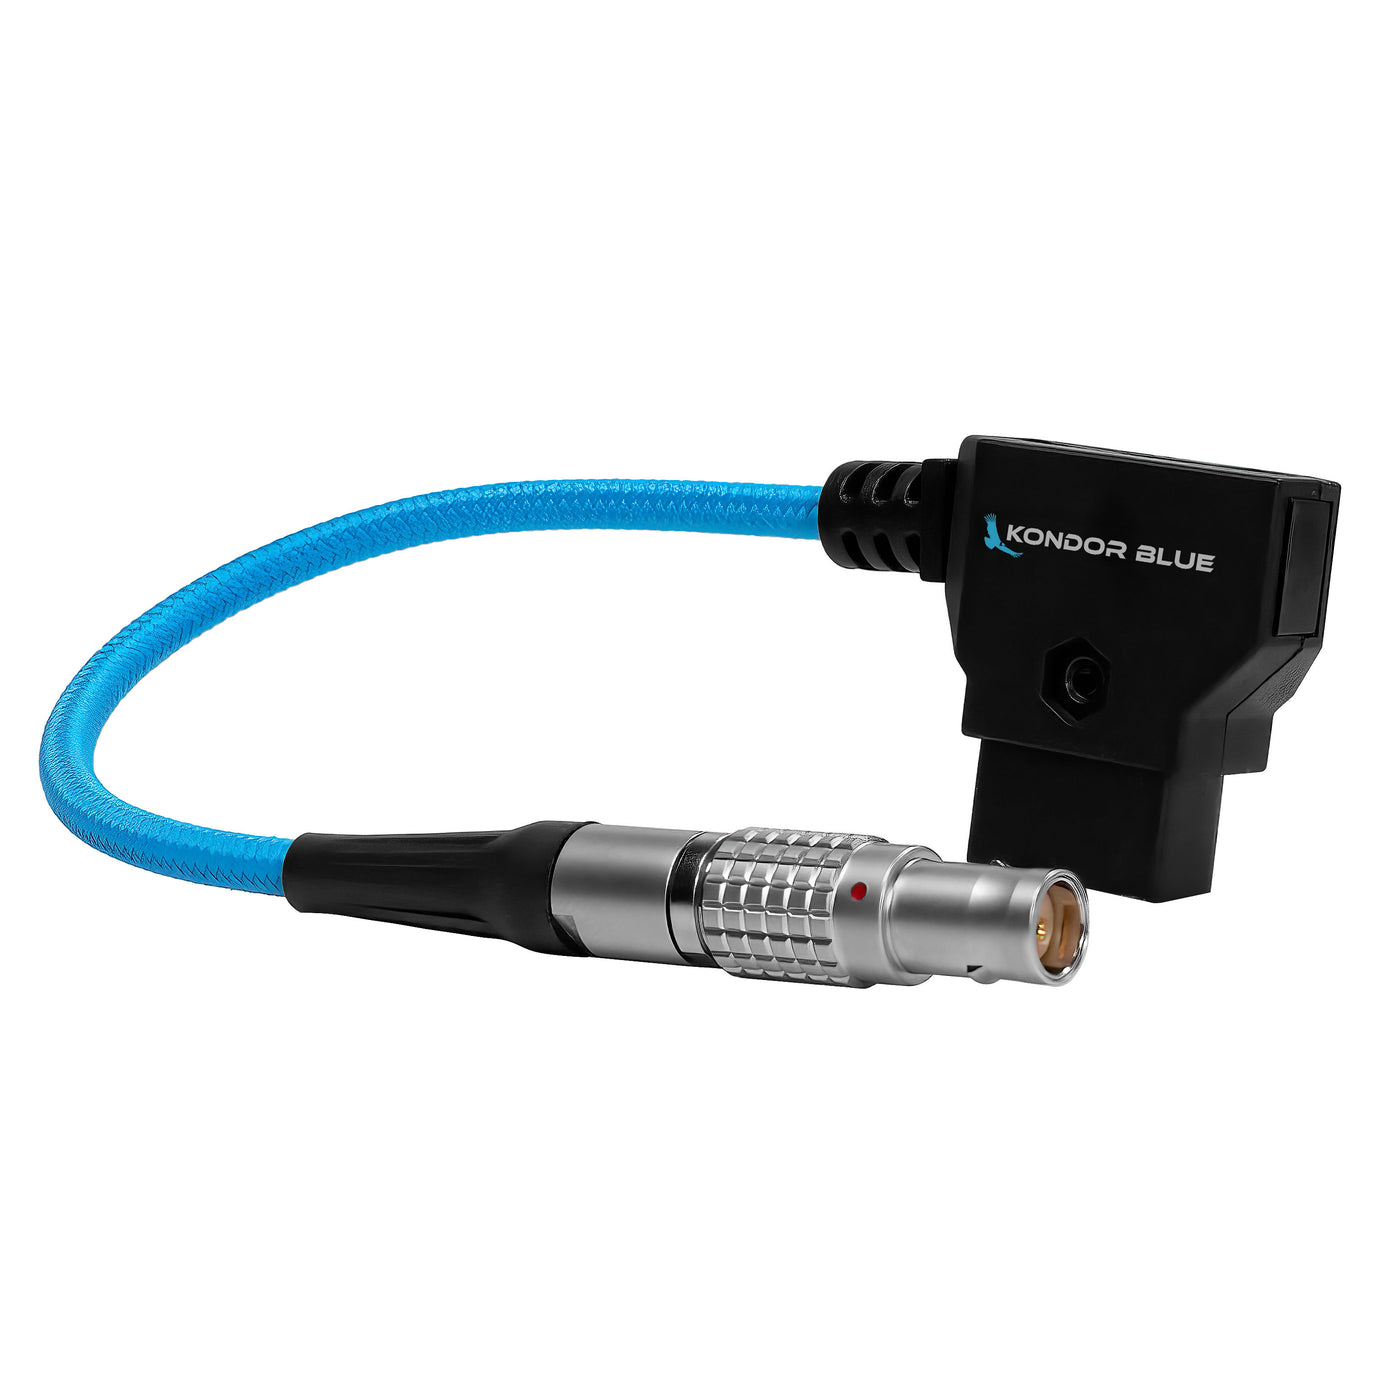 6" D-Tap to 2 Pin Lemo Female Adapter Cable for teradek